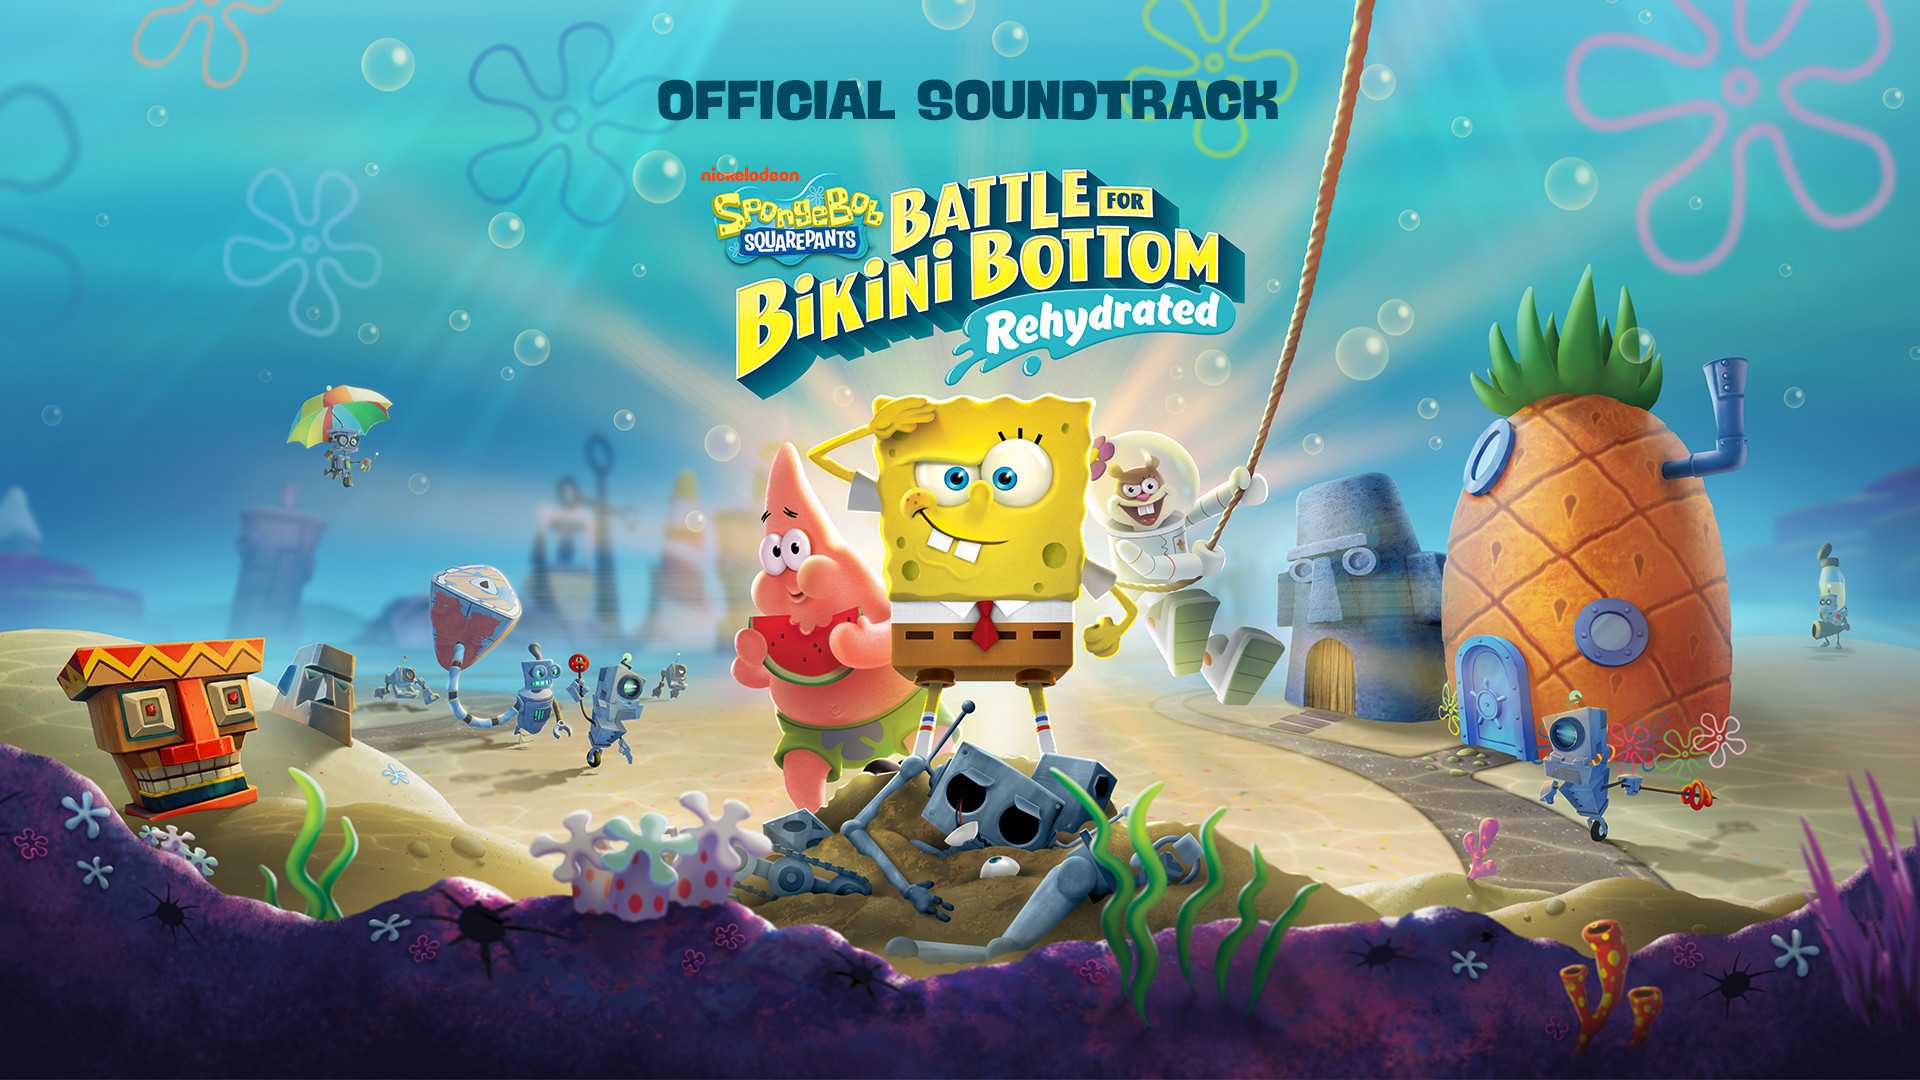 [$ 4.43] SpongeBob SquarePants: Battle for Bikini Bottom - Rehydrated Soundtrack Steam CD Key